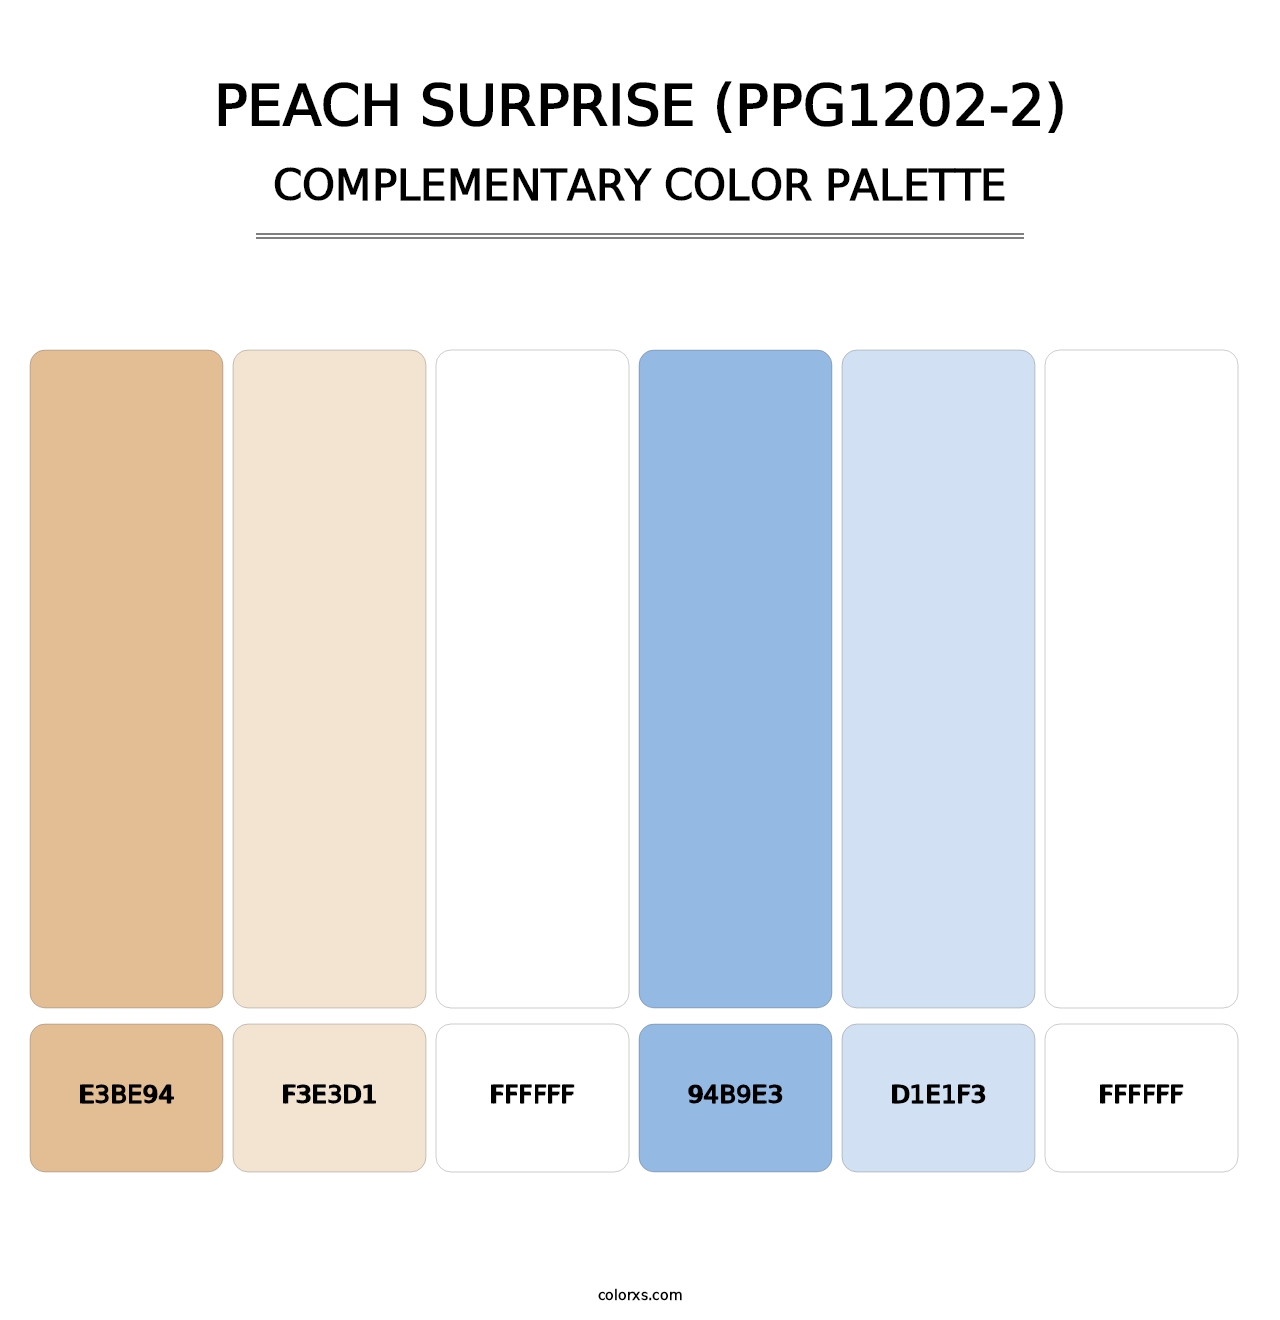 Peach Surprise (PPG1202-2) - Complementary Color Palette